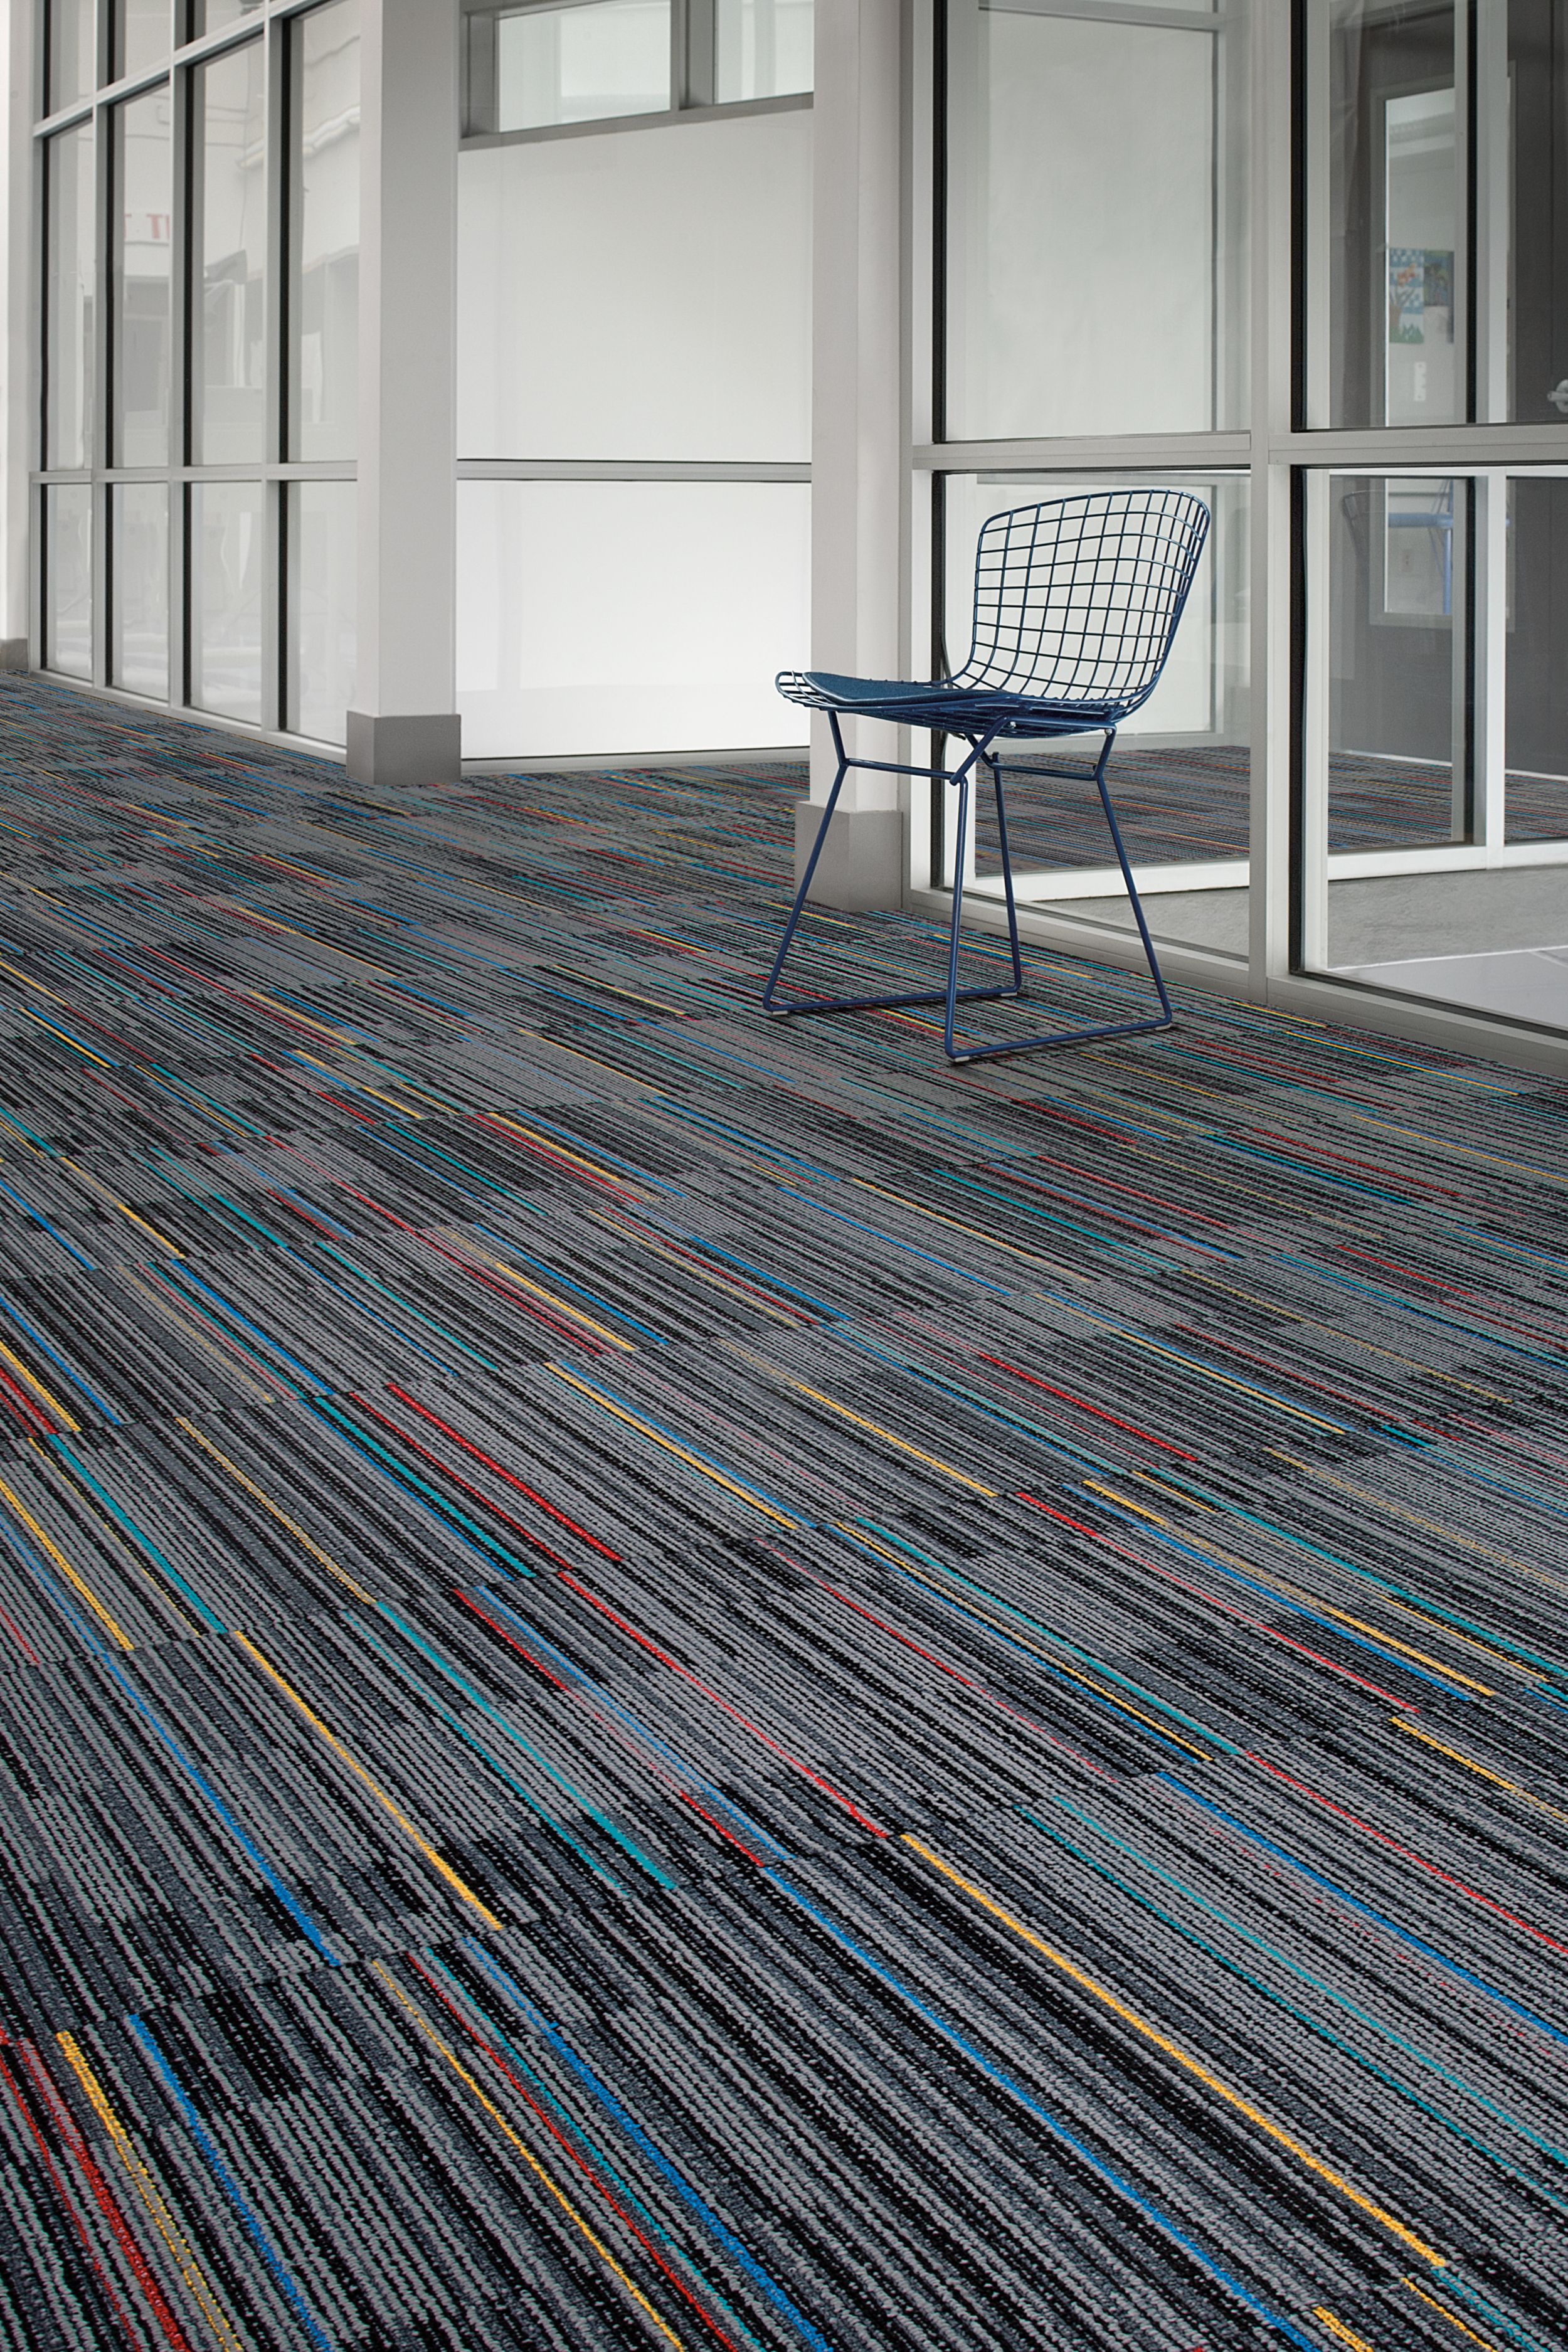 Interface Lima Colores carpet tile  in open corridor with single chair imagen número 1